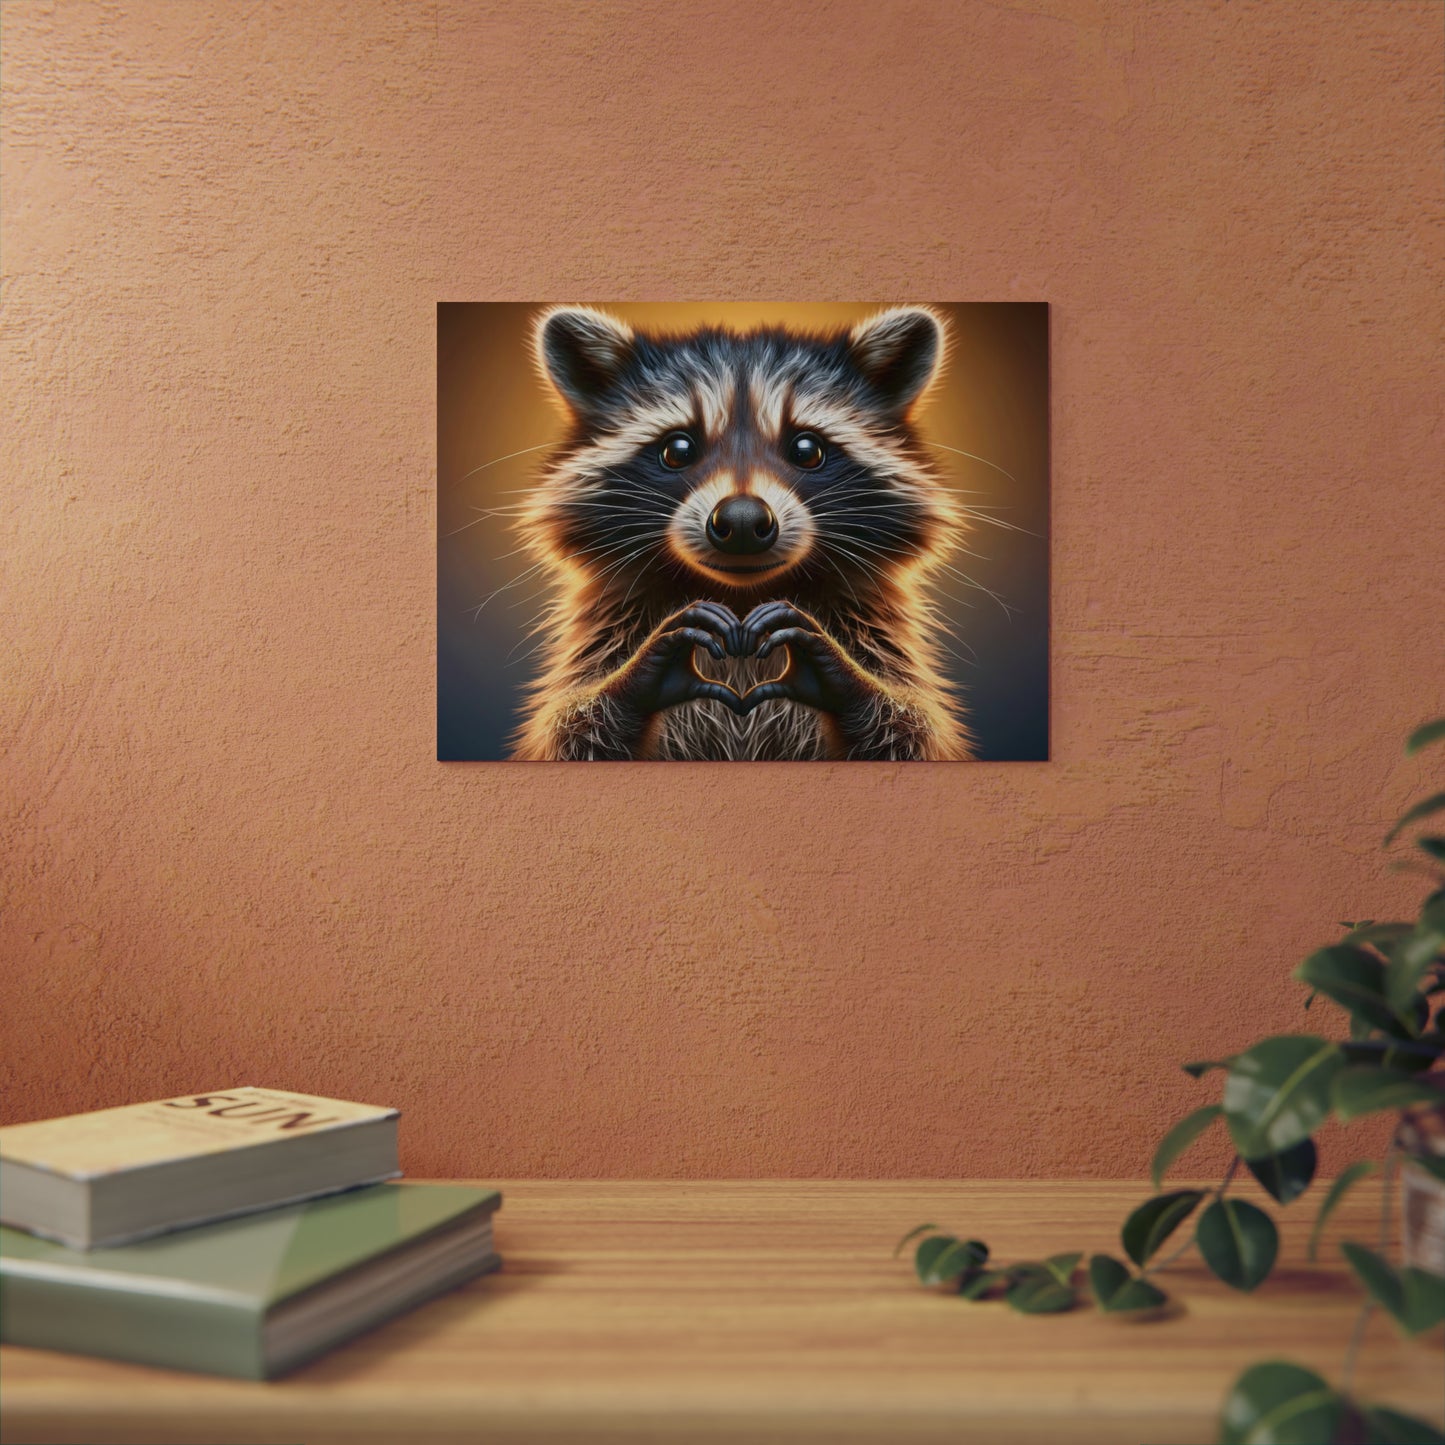 Raccoons Heartfelt Moment - Aluminum Composite Panel